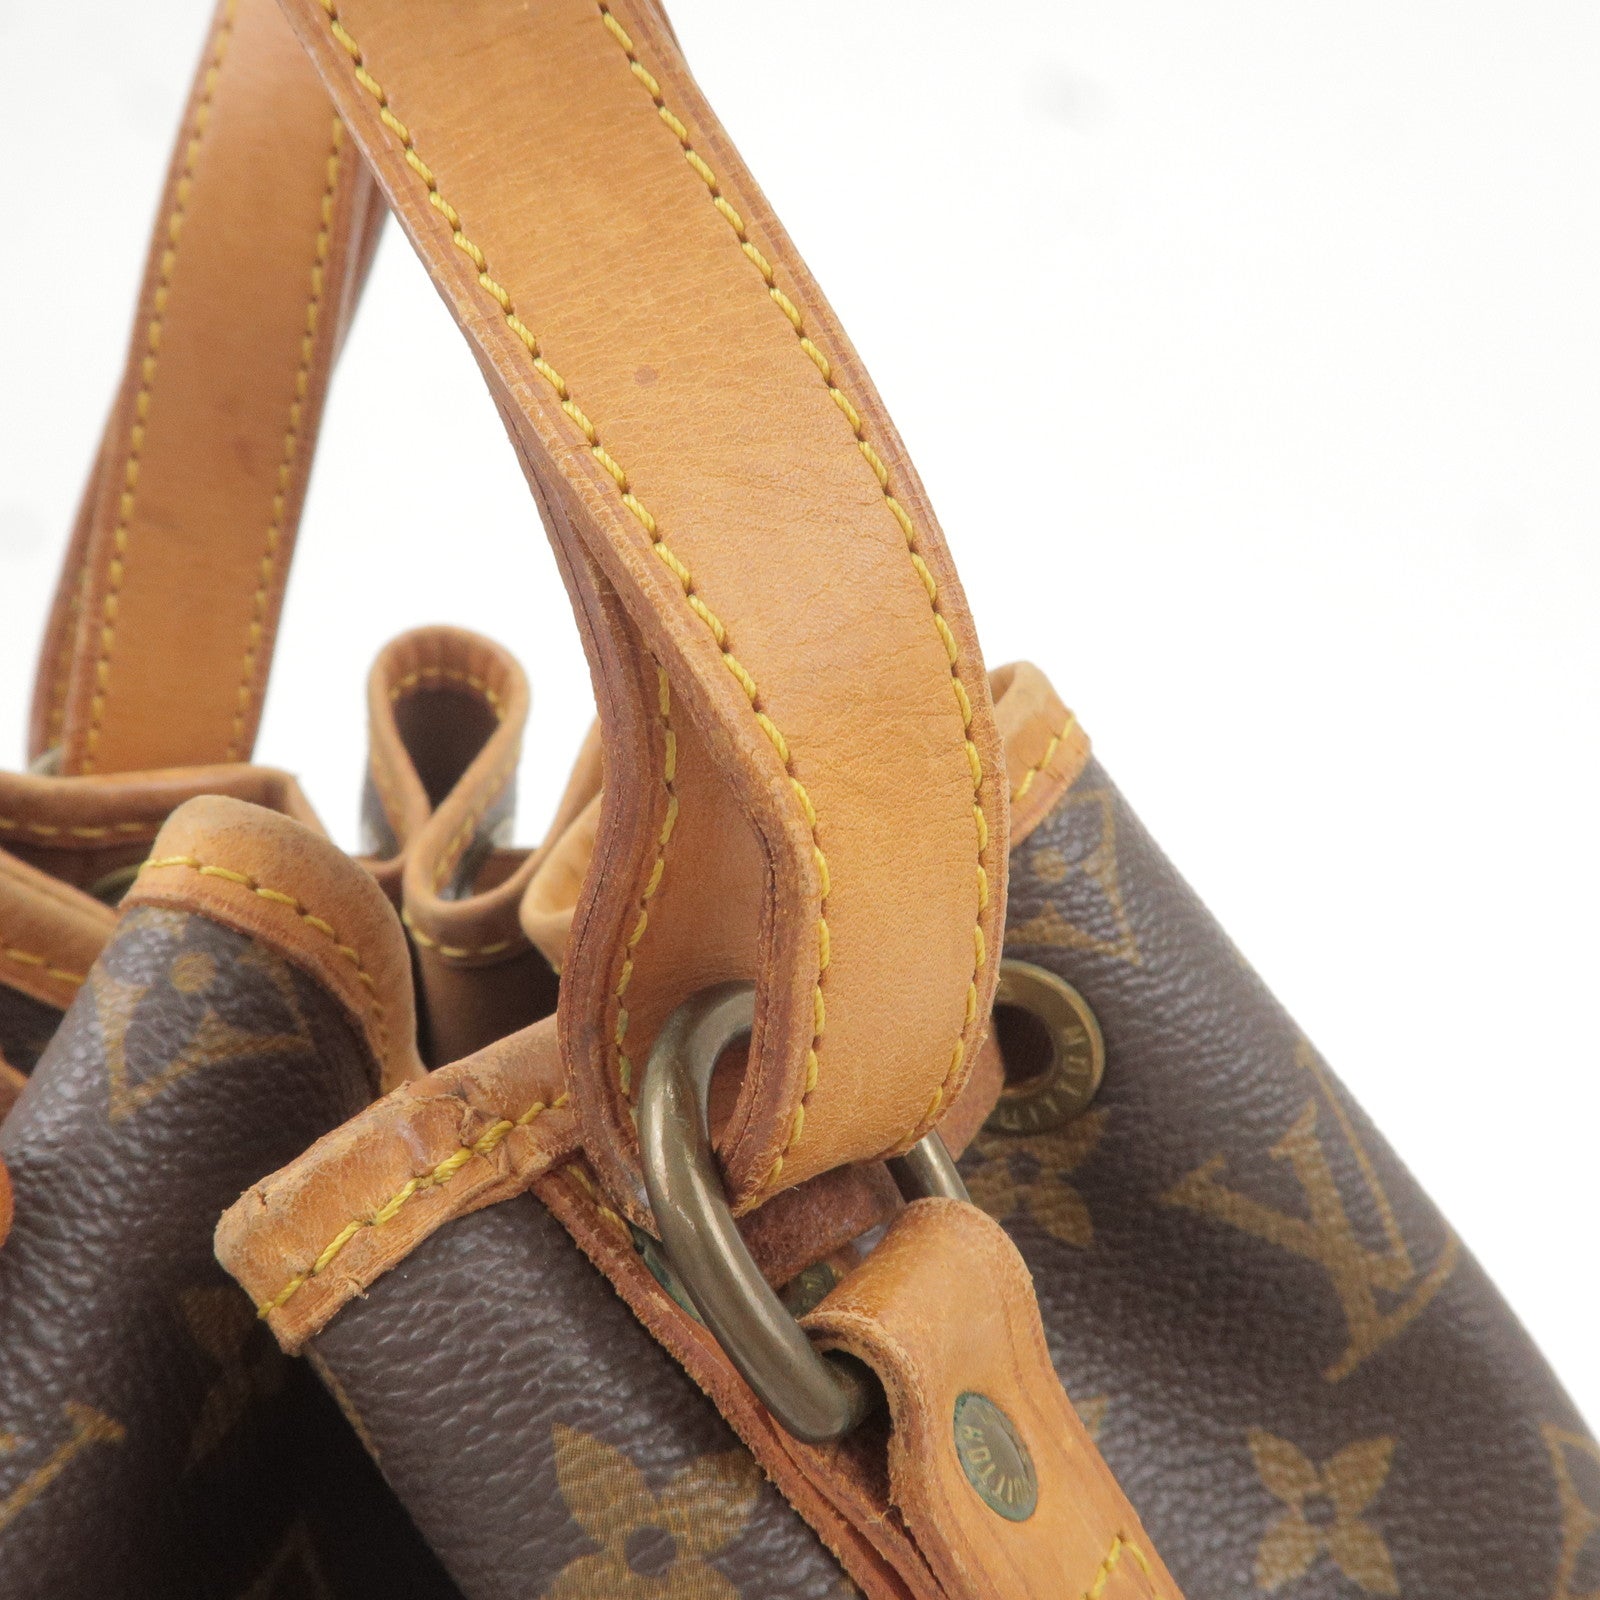 Vuitton - Hand - Louis - Monogram - M42224 – Yoon of AMBUSH Offers Sneak  Peek at Virgil Abloh's Louis Vuitton x Nike Air Force 1 - Shoulder - Bag -  Love the Louis Vuitton pochette bags - Bag - Noe